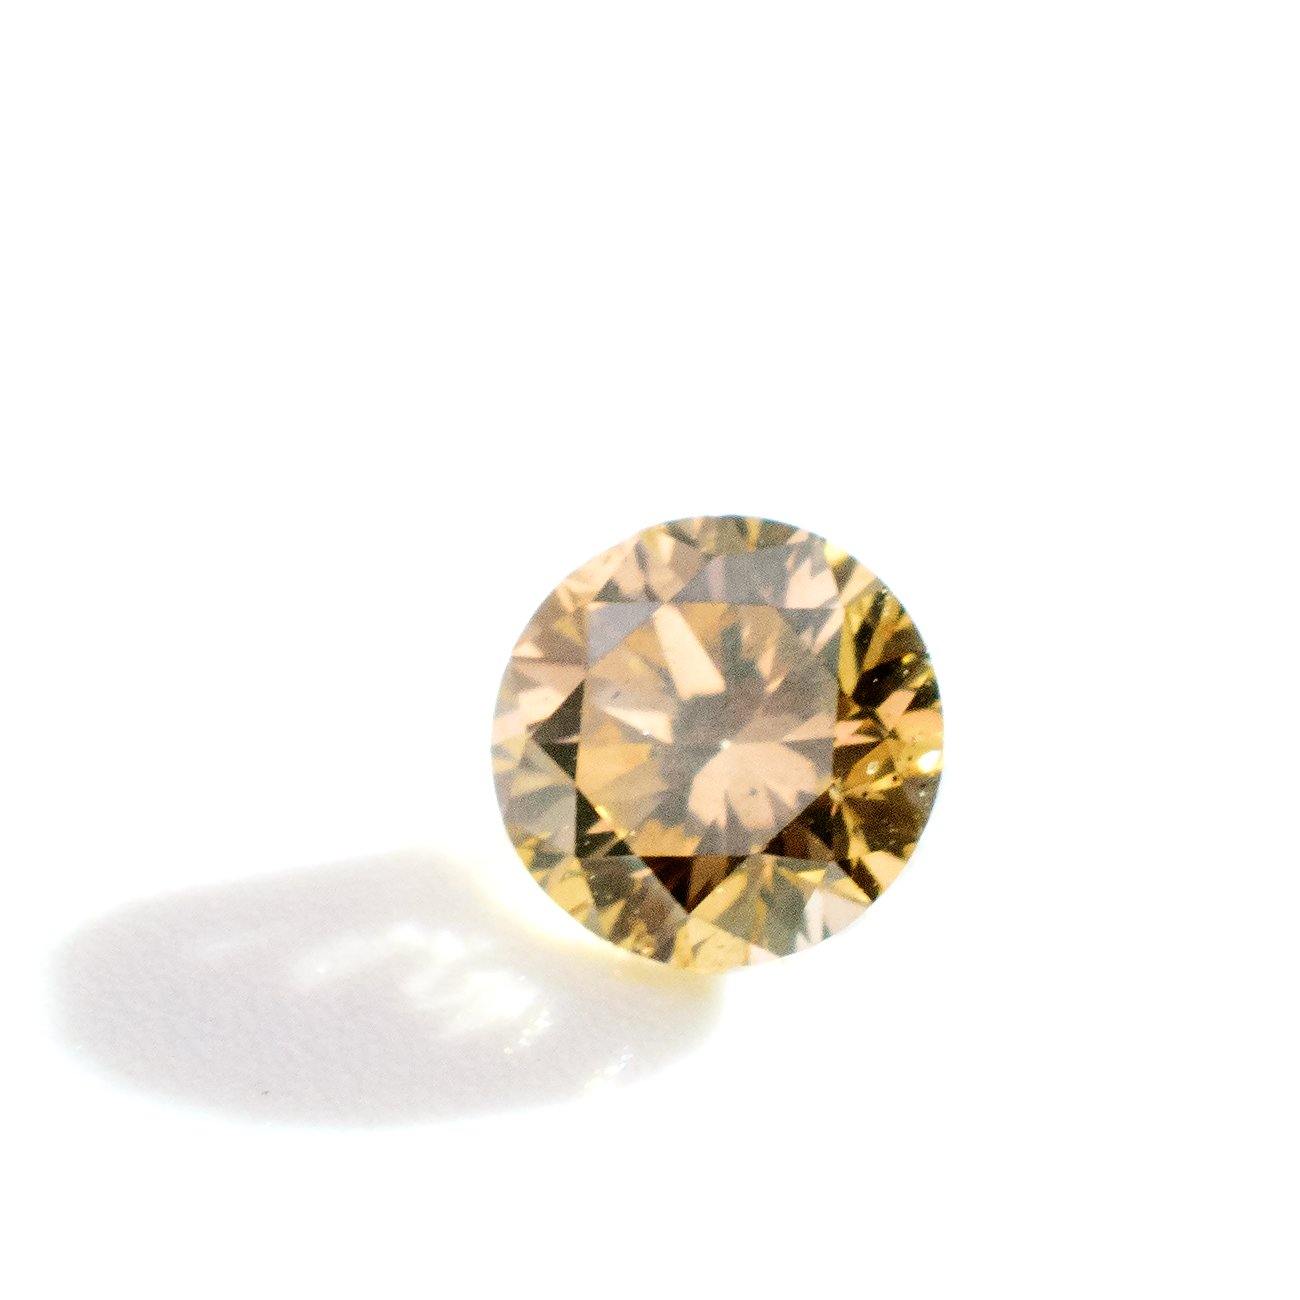 0.32 Carat Brown Natural Diamond Round Cut Loose Gemstone - Modern Gem Jewelry 